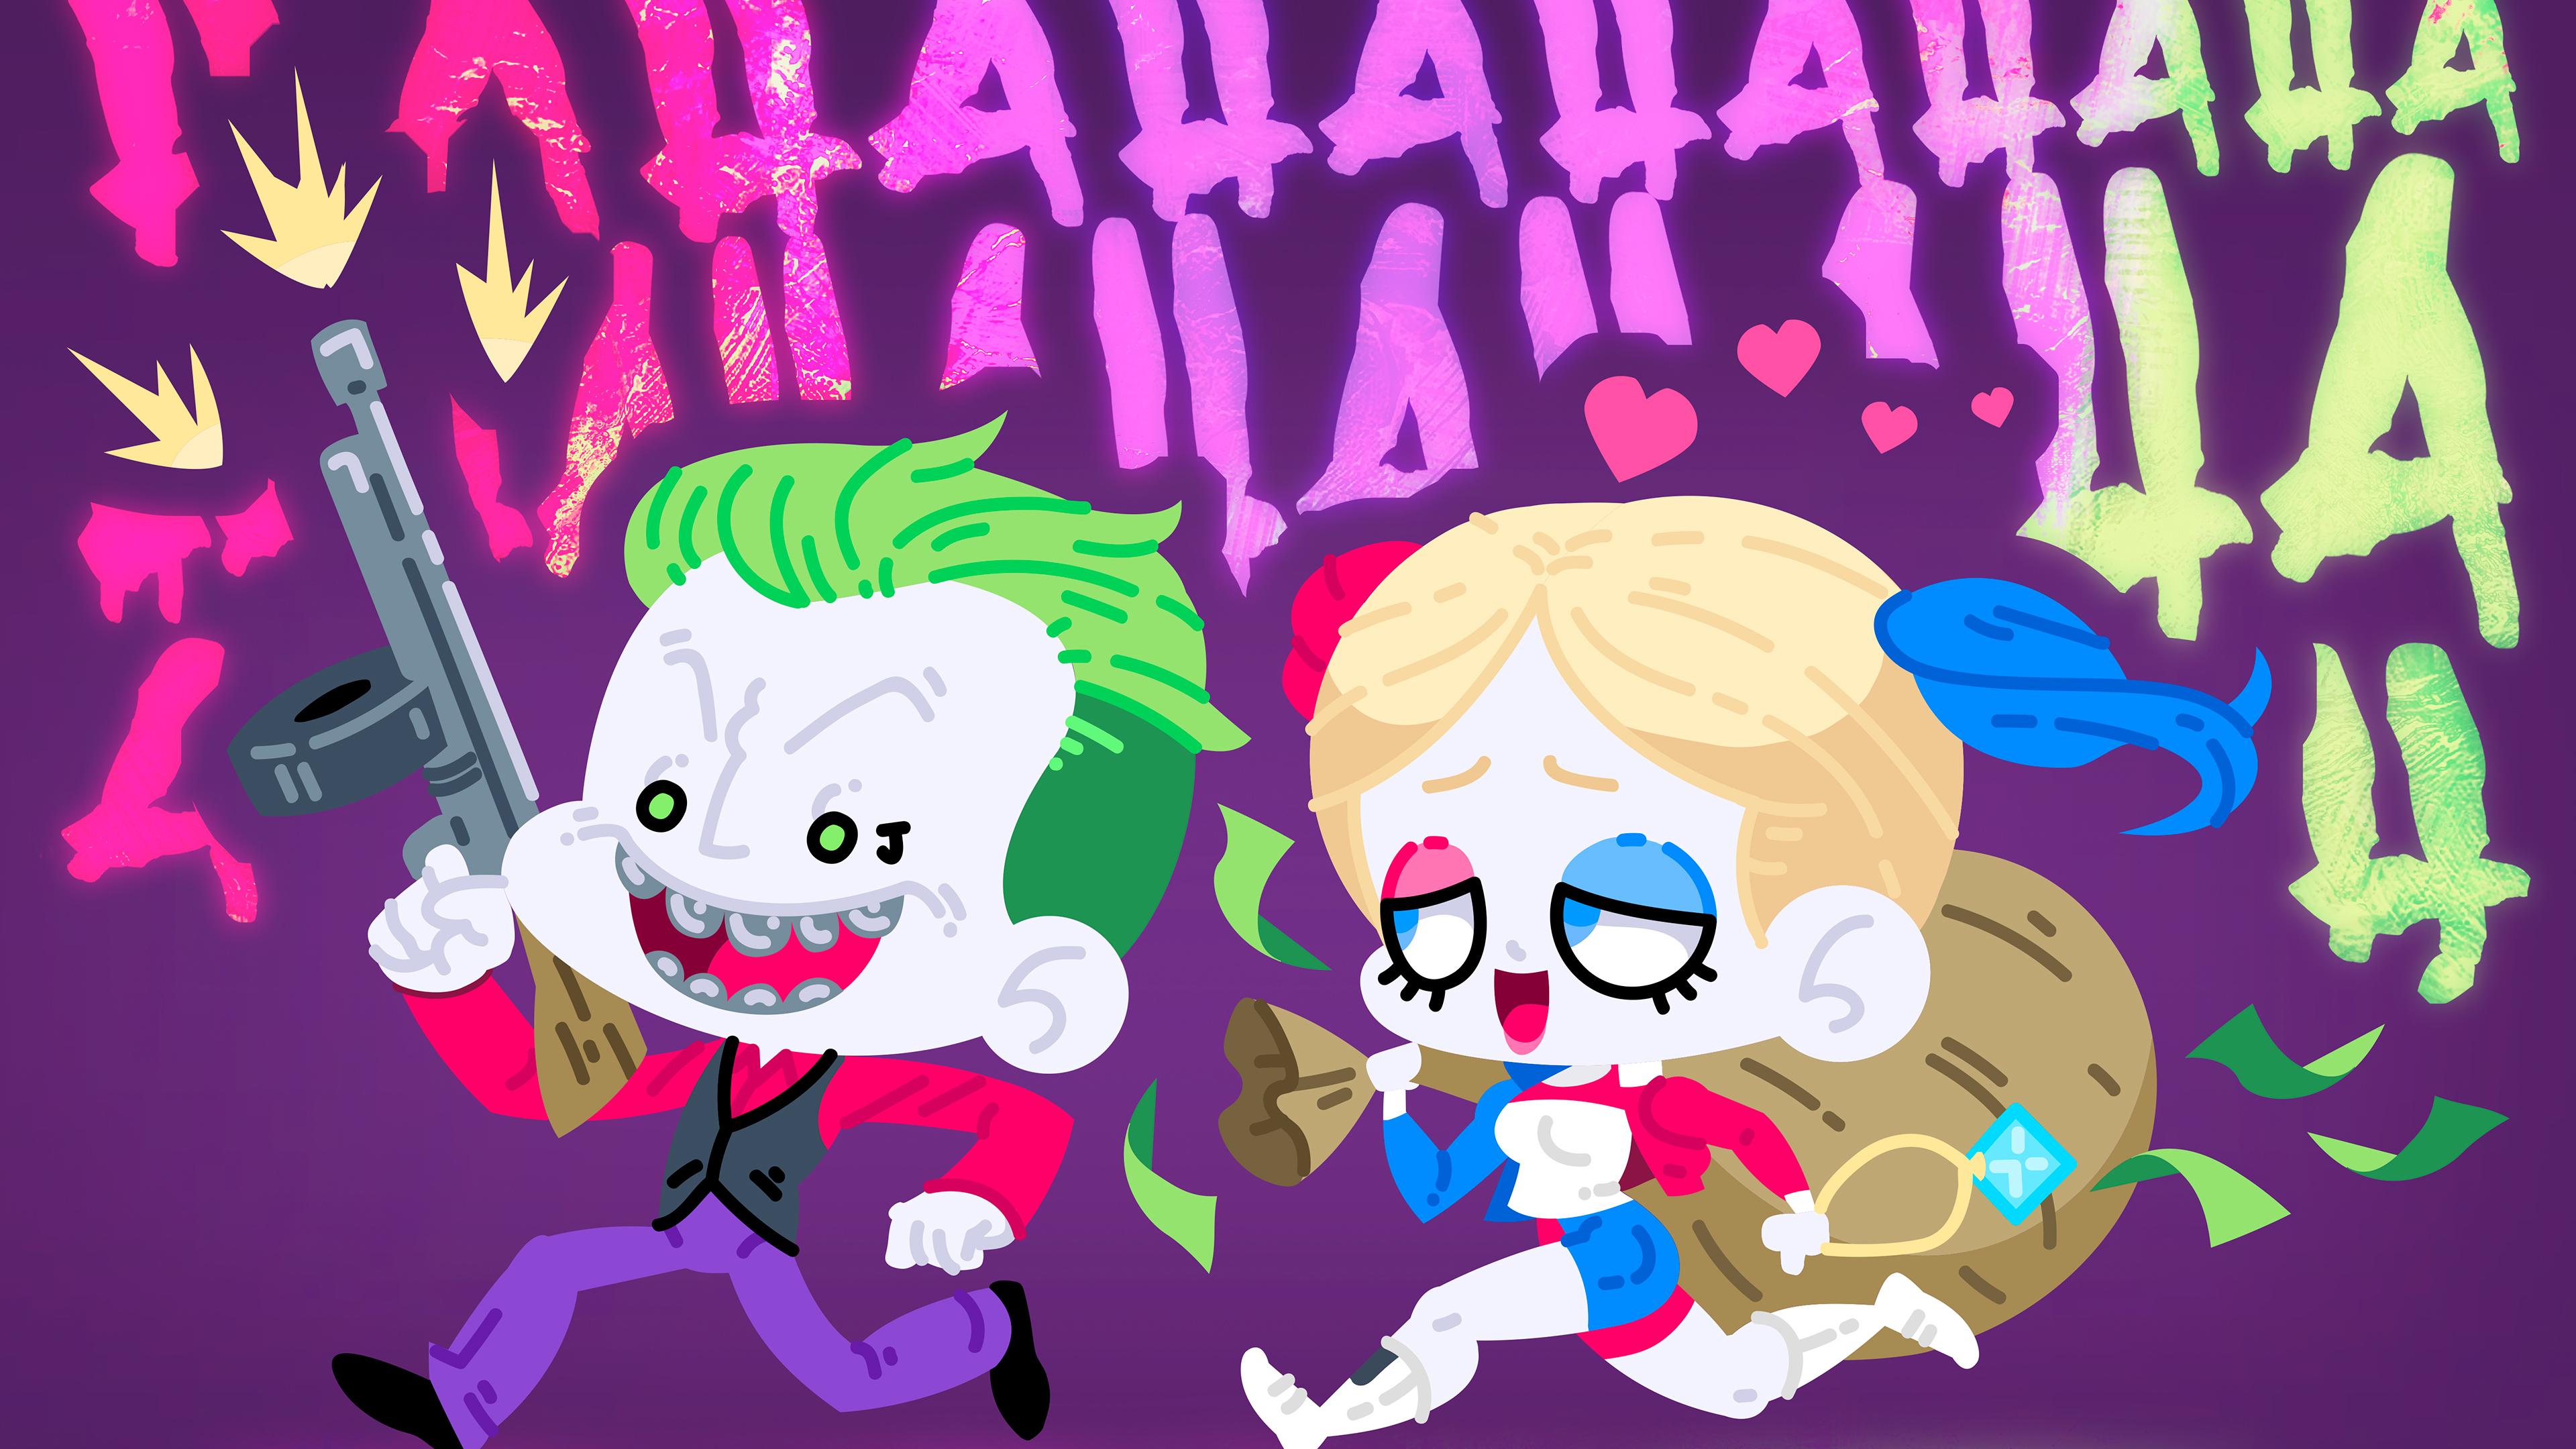 Wallpaper 4k Joker And Harley Quinn Fat Heads Wallpaper